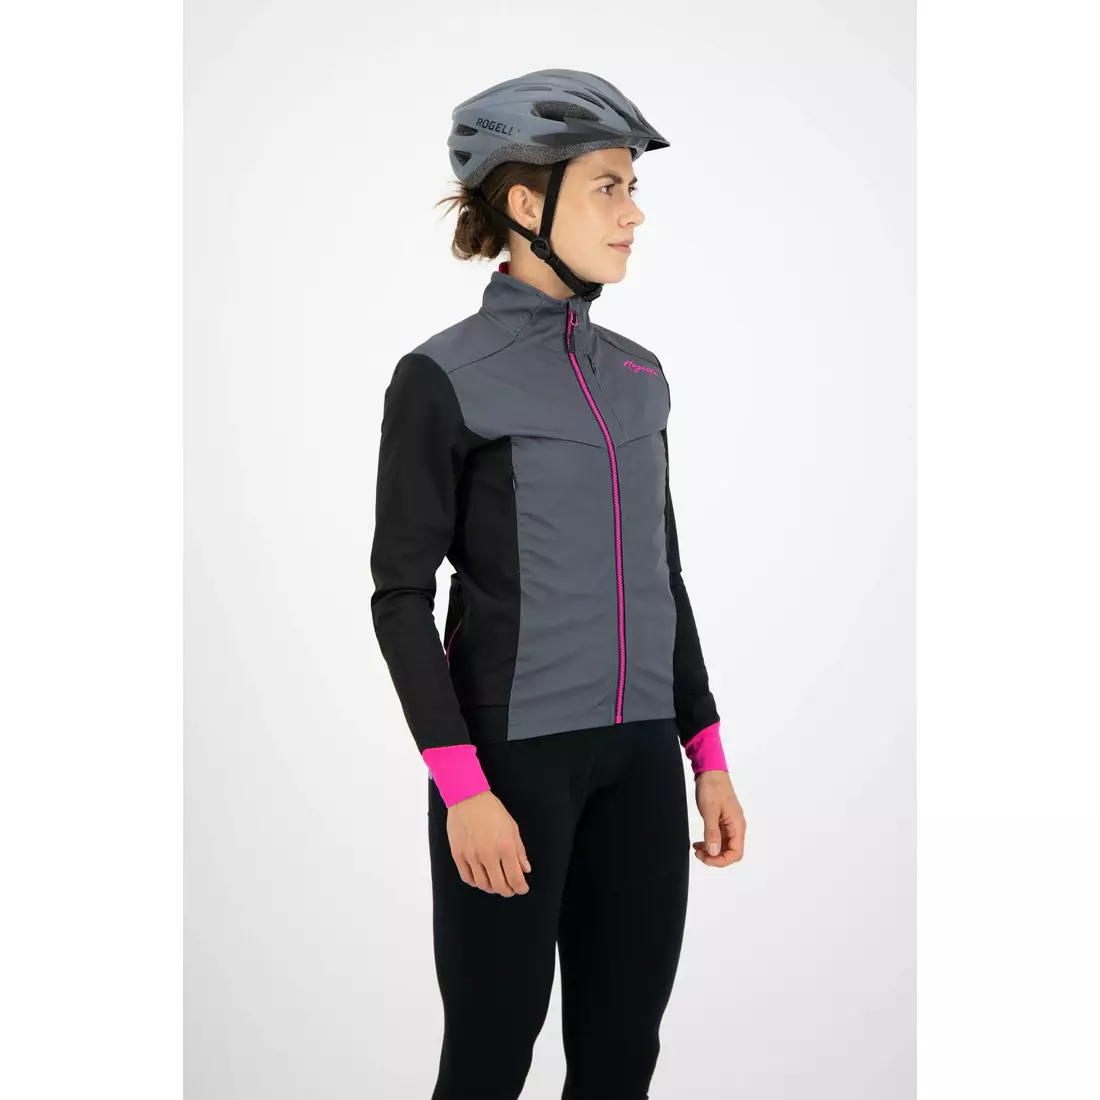 ROGELLI CONTENTA dámska ľahká zimná cyklistická bunda, sivo-ružová